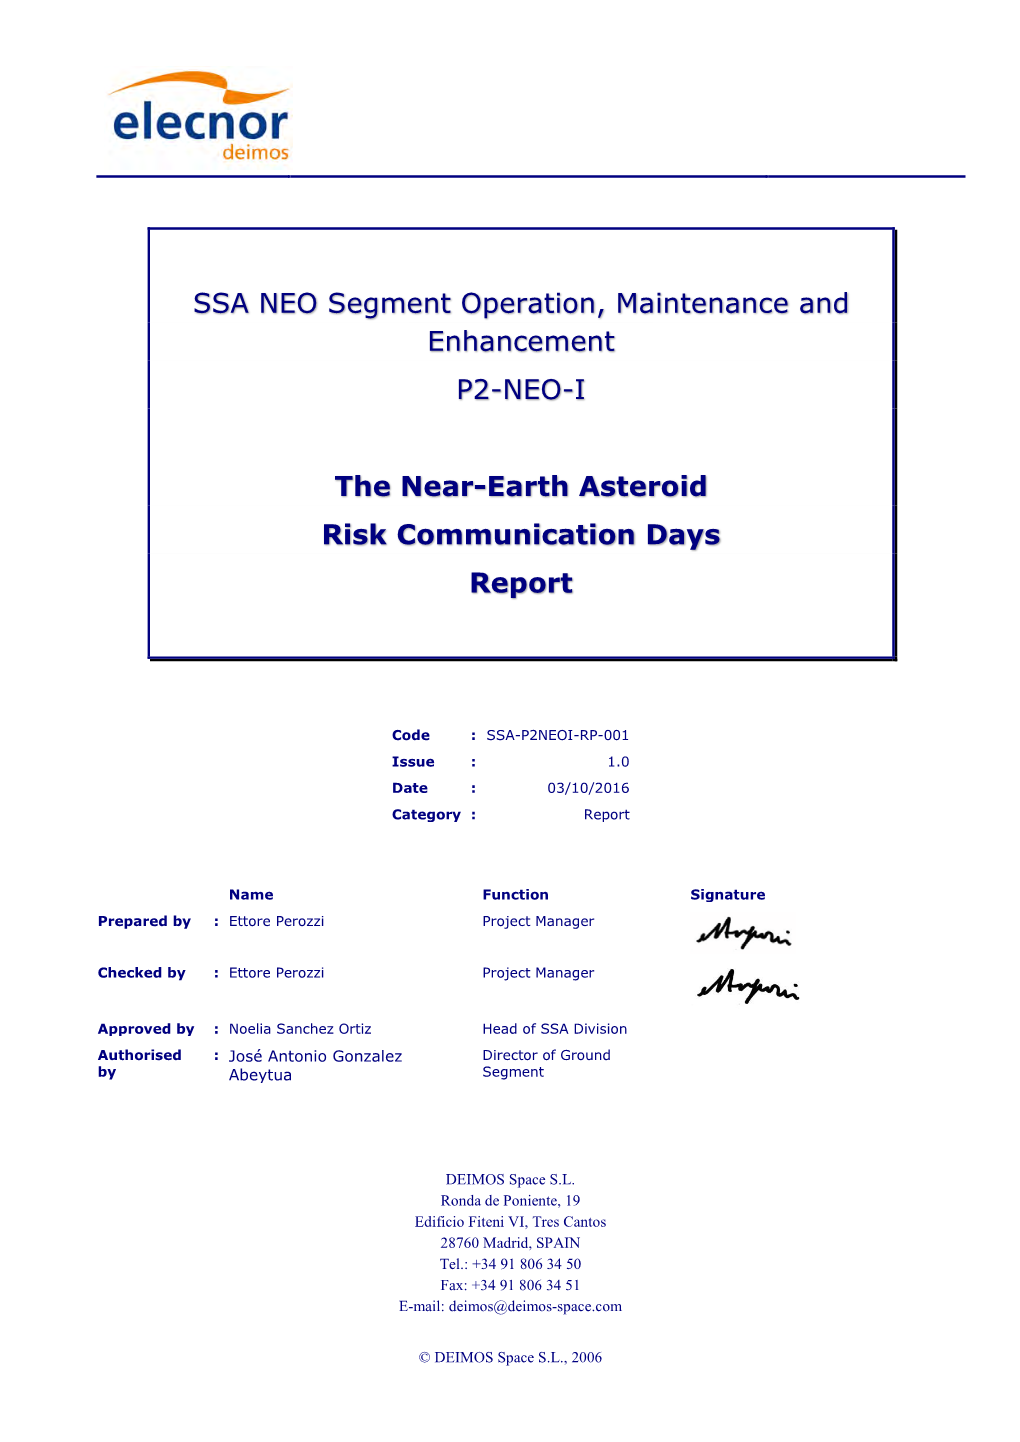 SSA NEO Segment Operation, Maintenance and Enhancement P2-NEO-I